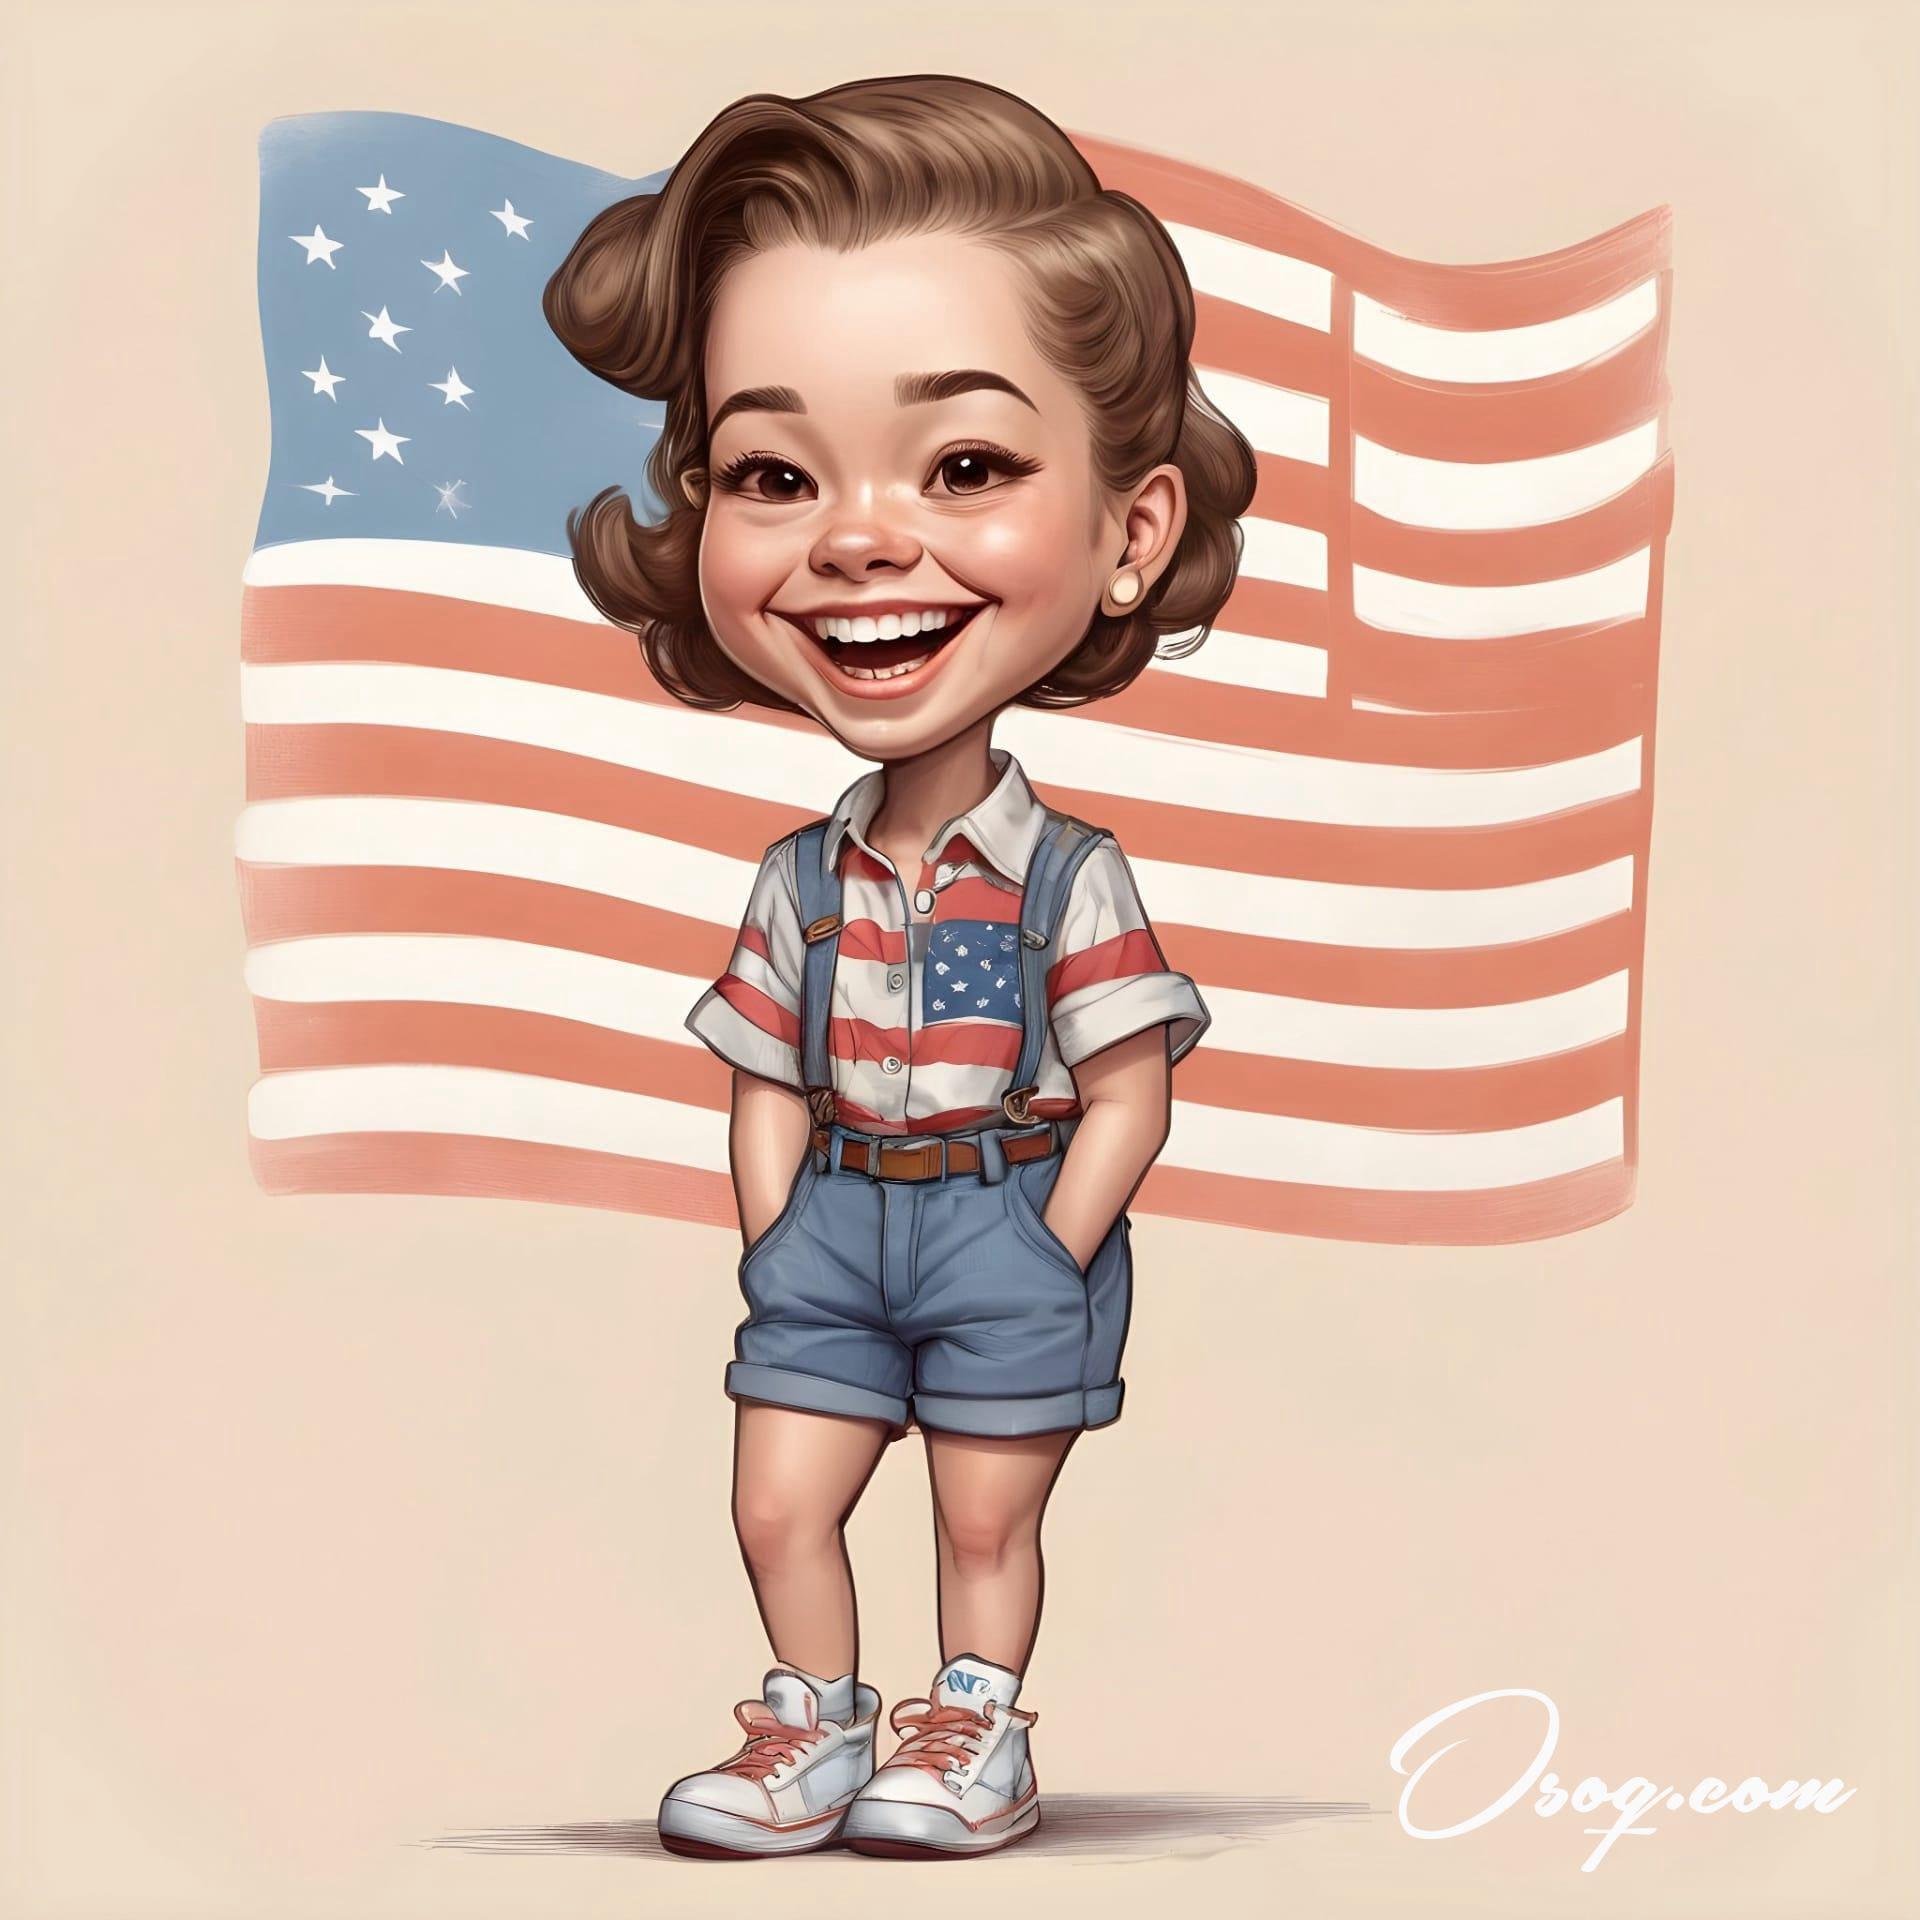 American cartoon 19